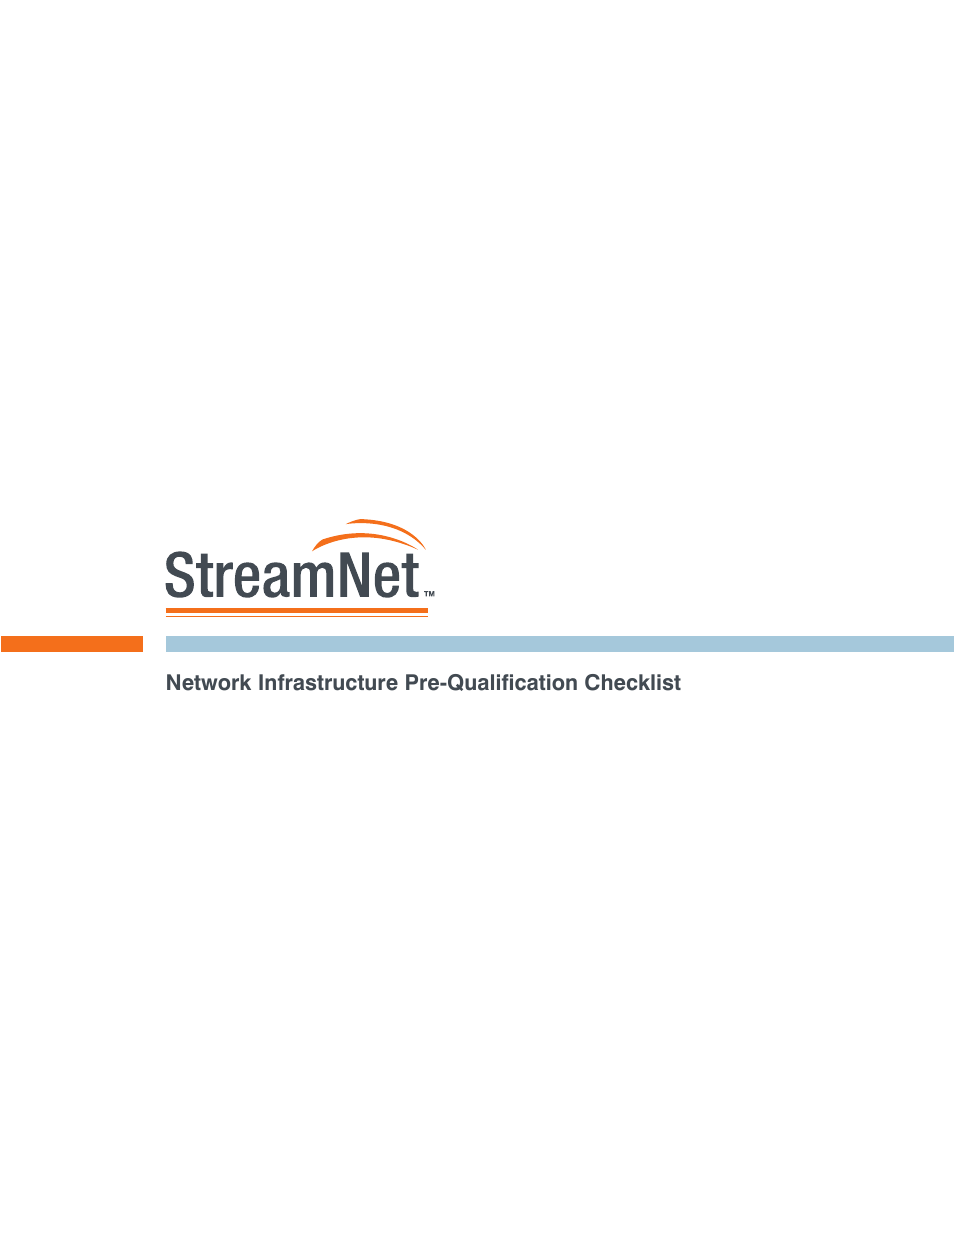 StreamNet Network Infrastructure Pre-Qualification